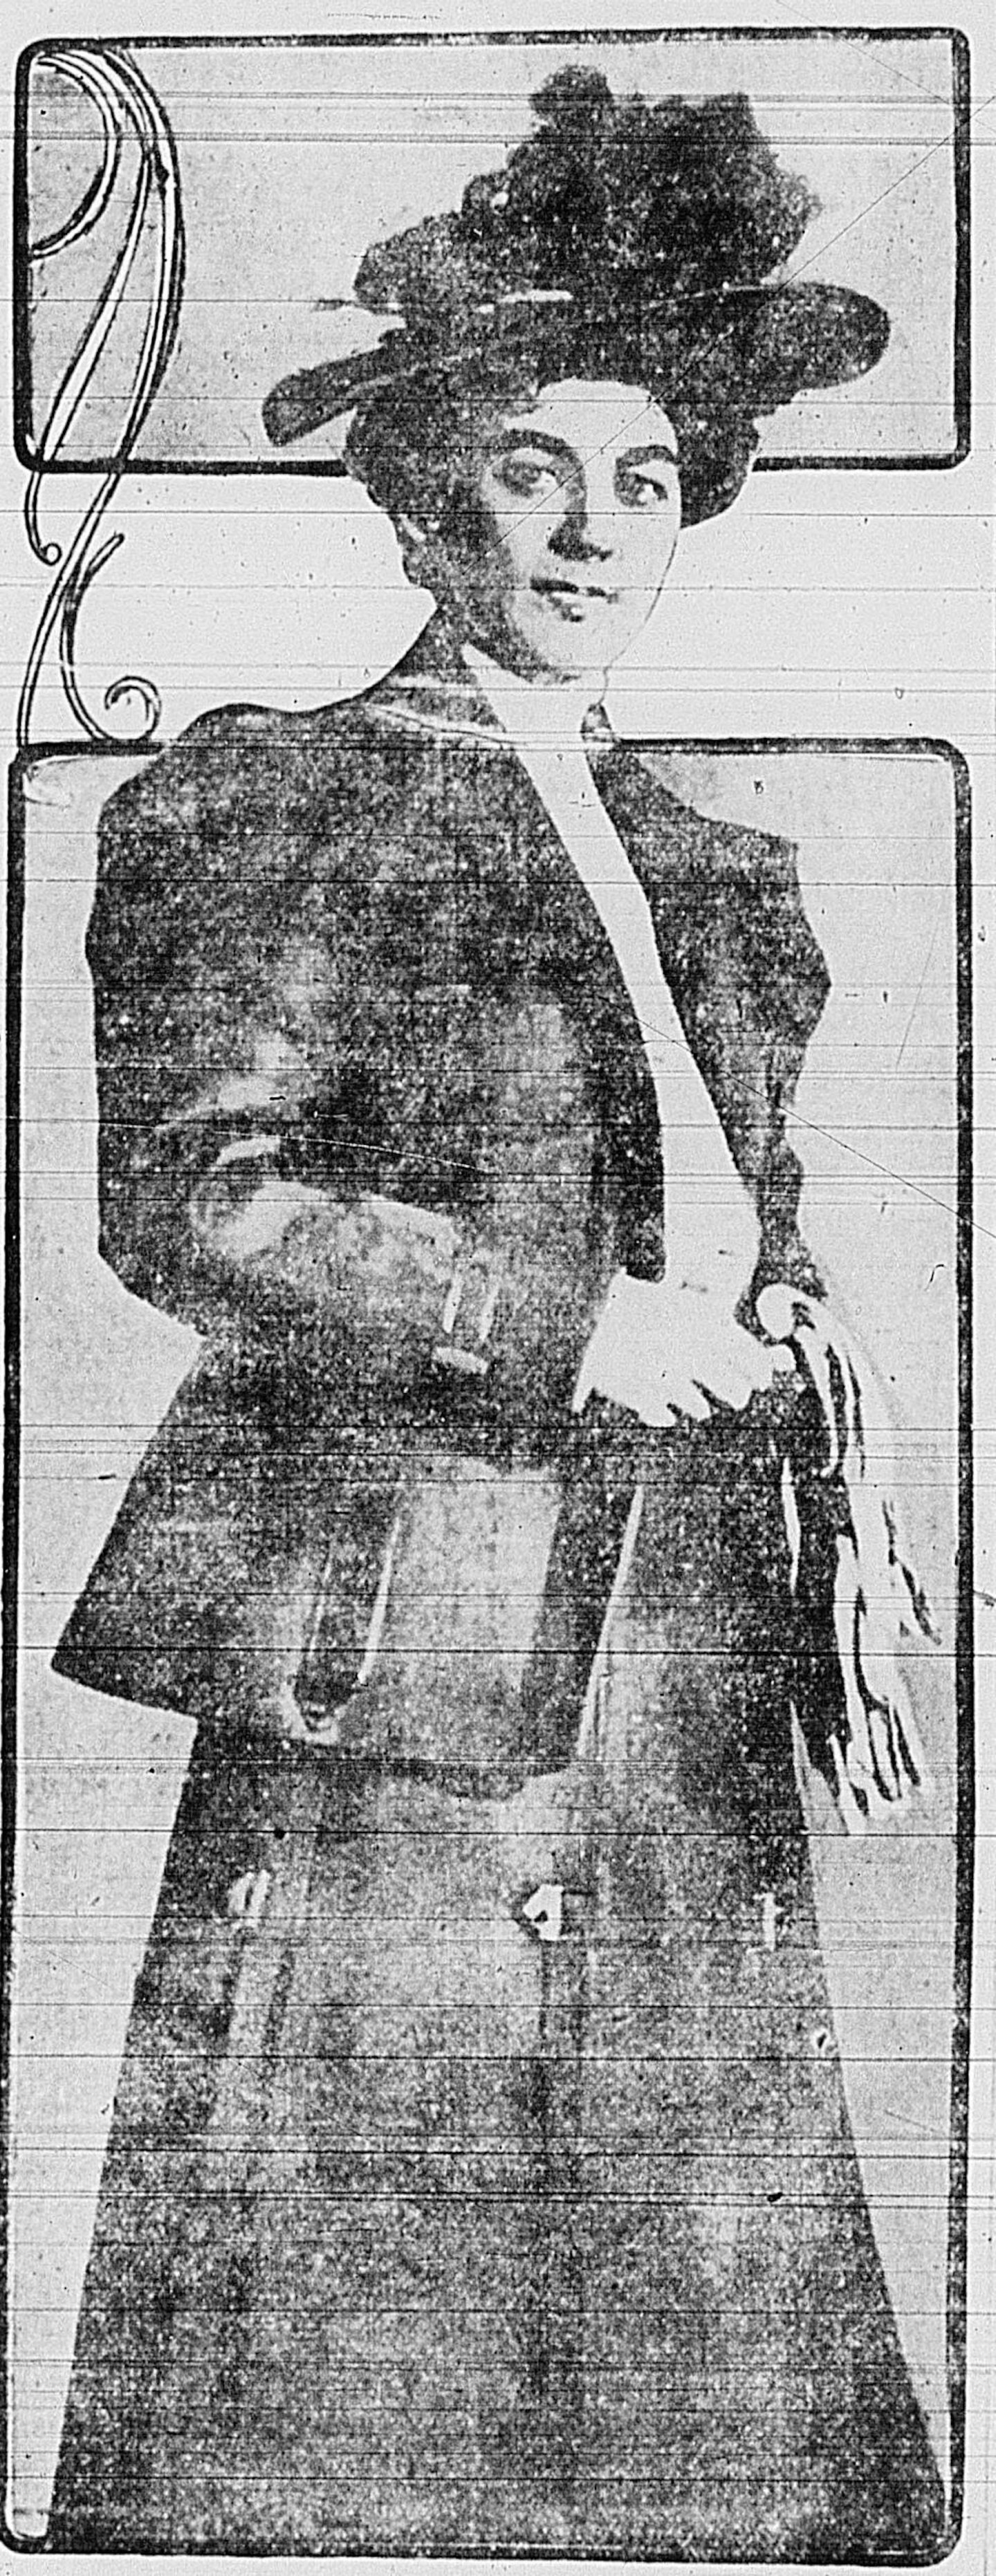 Elizabeth Magie newspaper image 1906